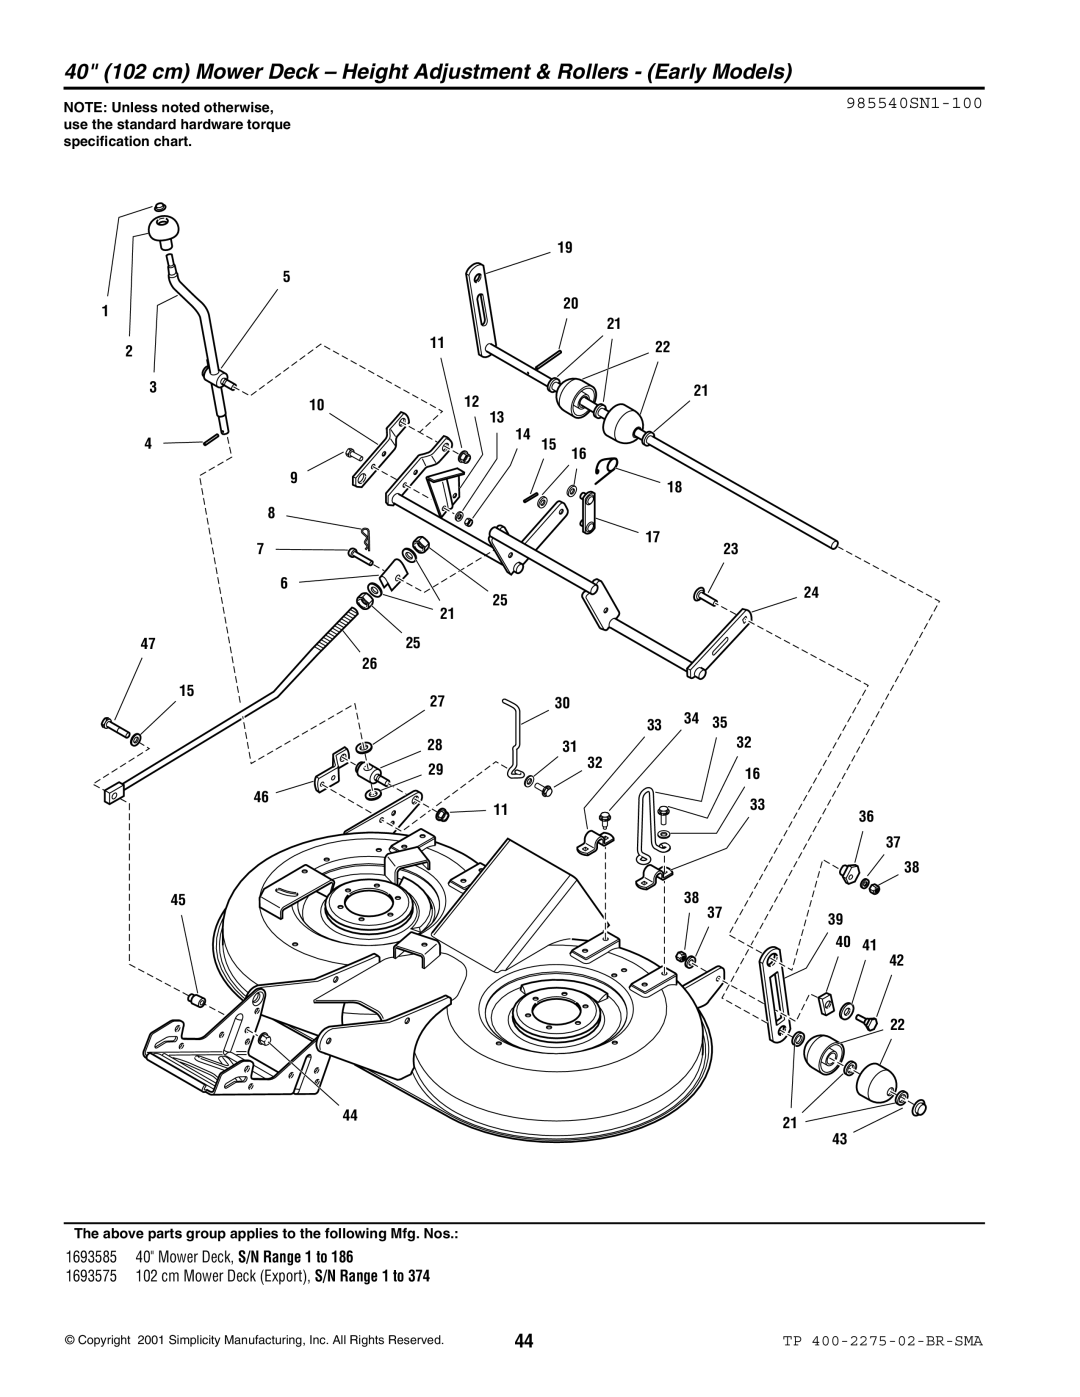 Massey Ferguson L&G 1693583 manual 40 102 cm Mower Deck - Height Adjustment & Rollers - Early Models, 985540SN1-100 